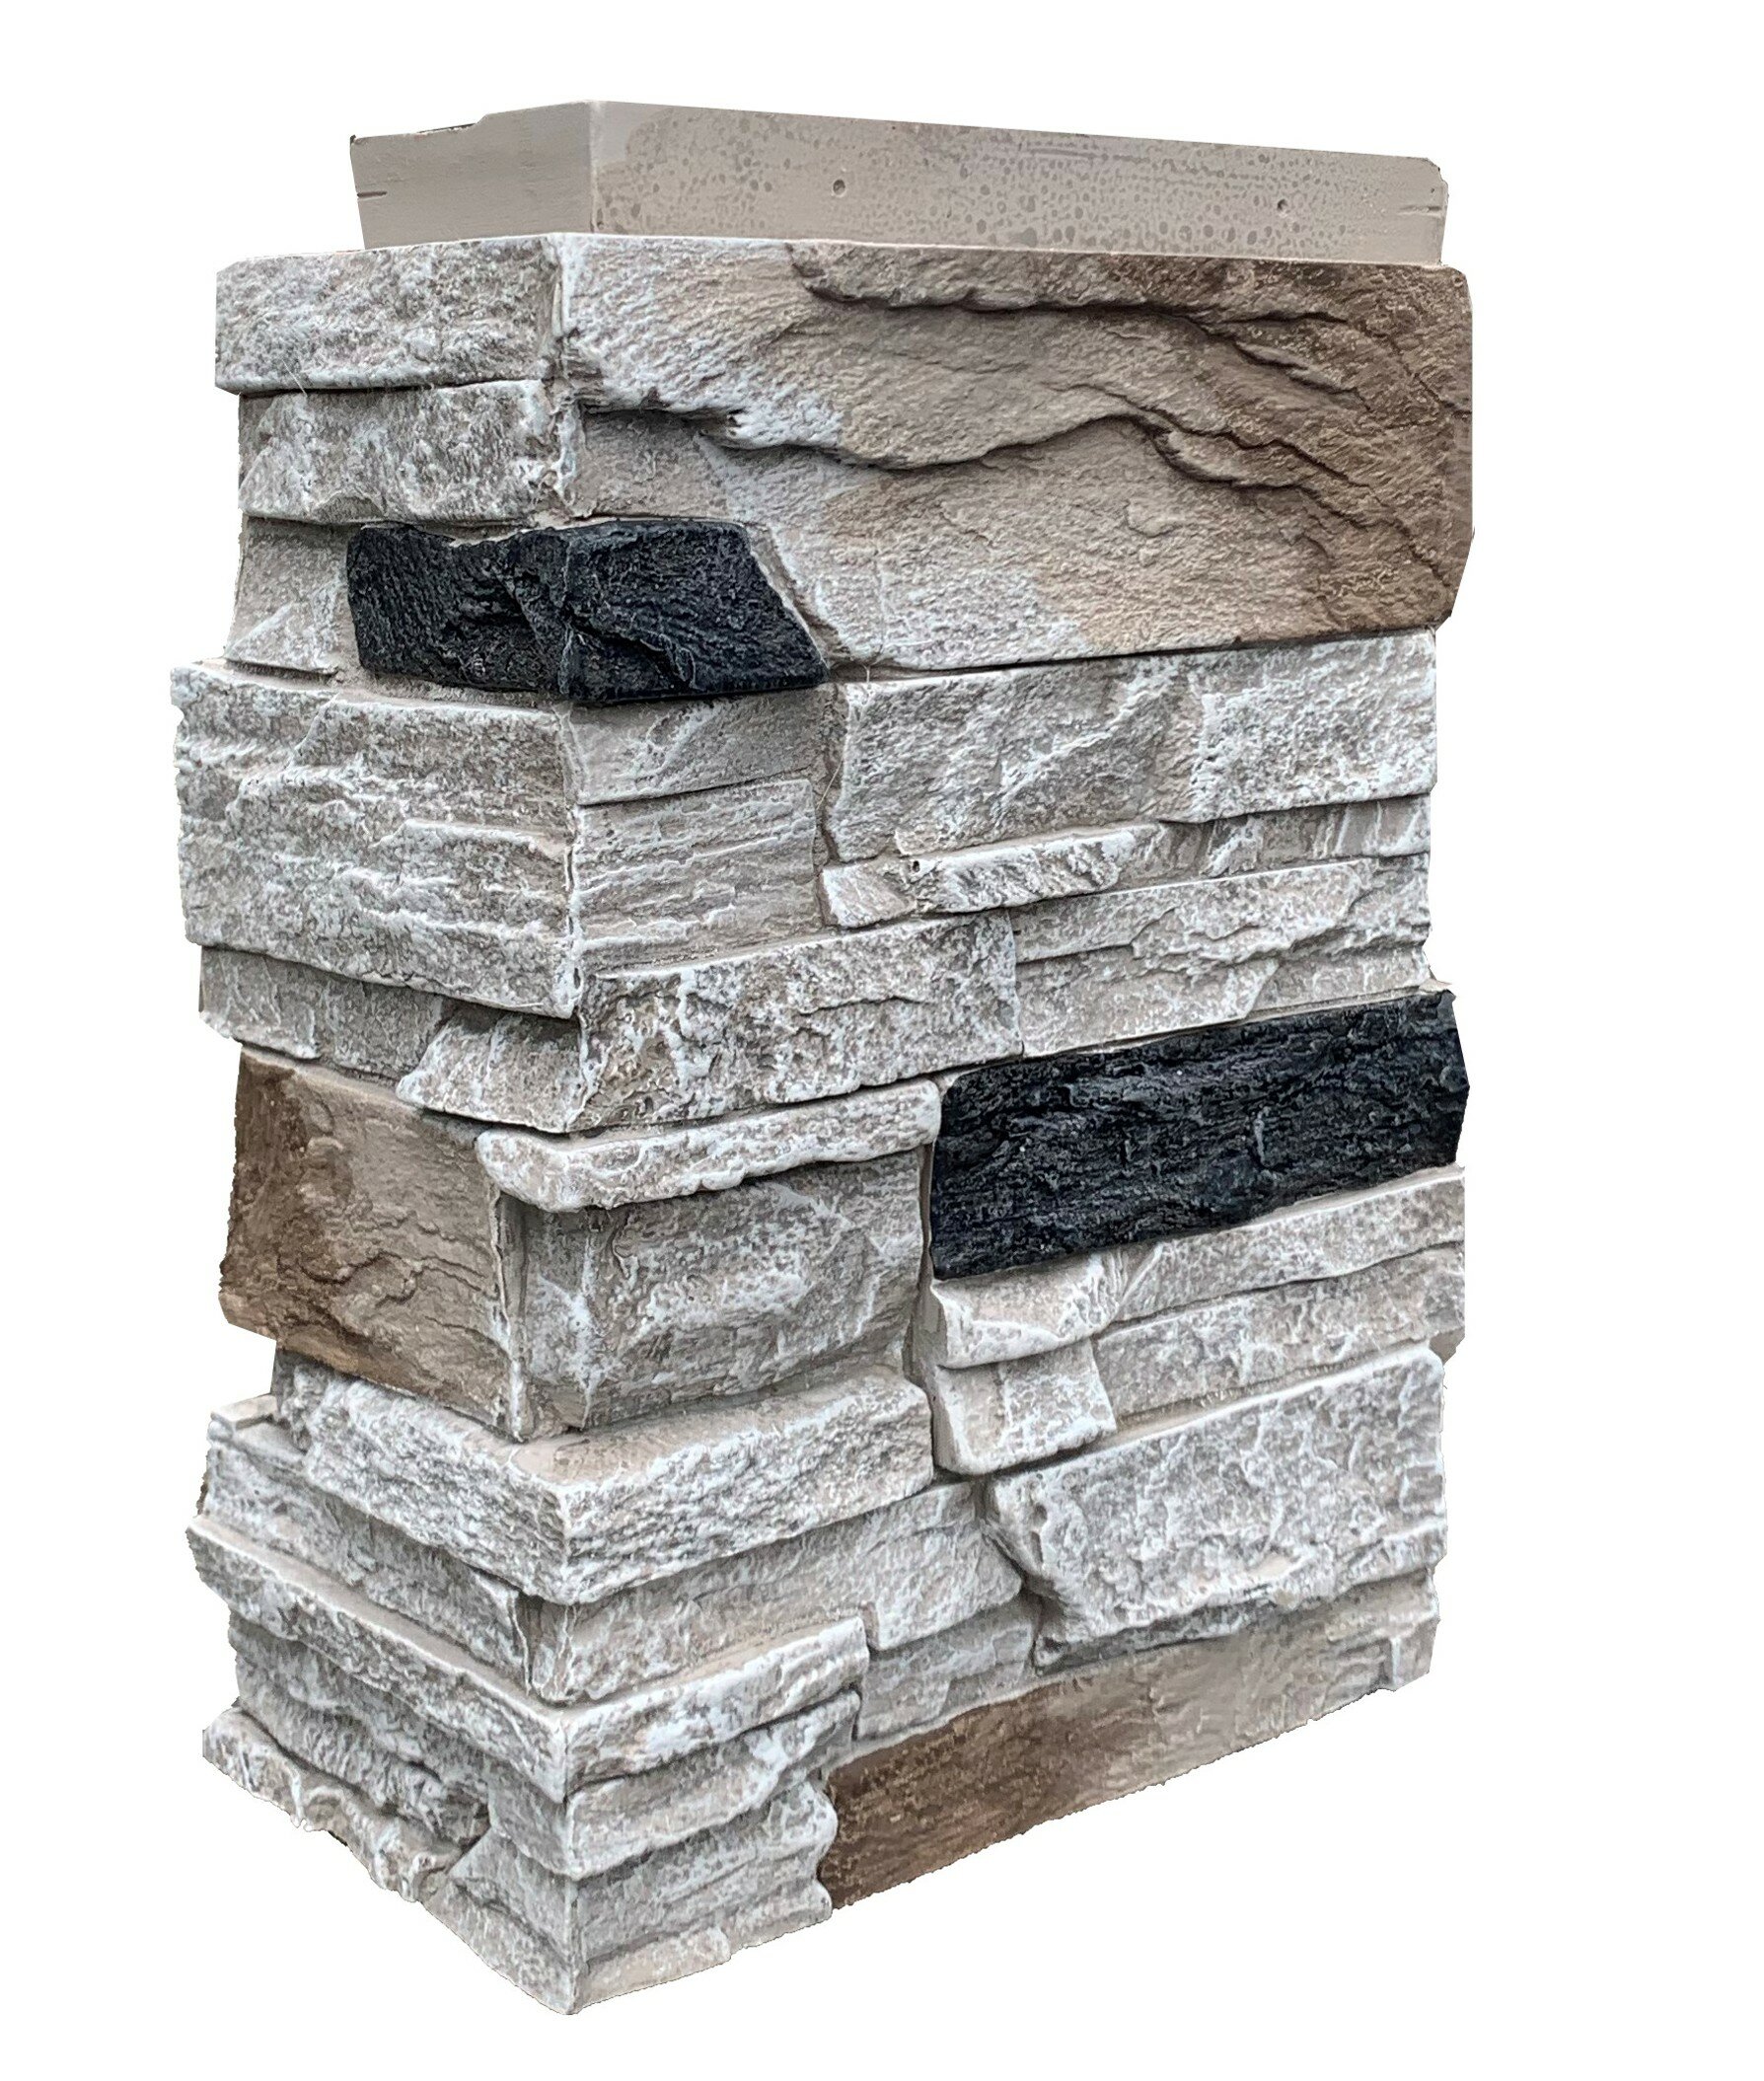 Nextstone Pinterlocking Corner Country 6 X 8 Composite Stacked Stone Tile Wayfair